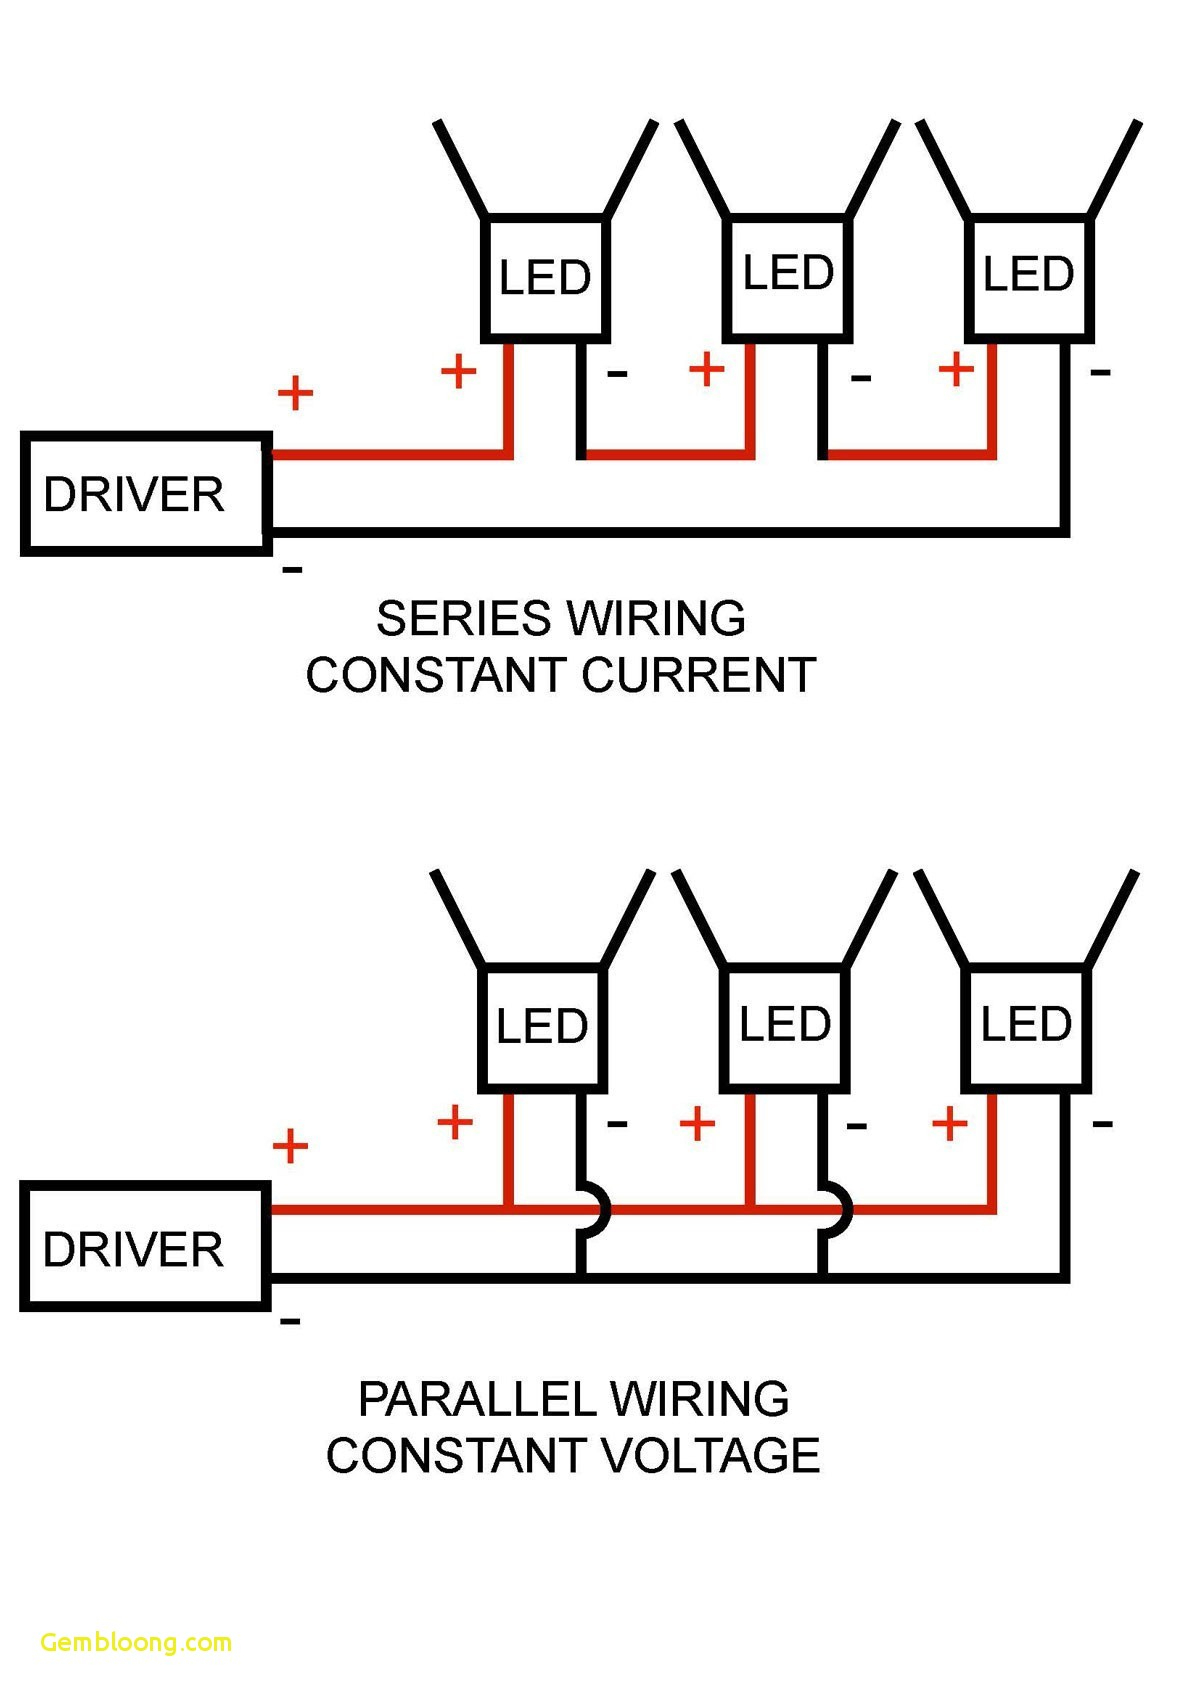 Wiring Diagram Of Led Recessed Lighting | Wiring Library - Recessed Lighting Wiring Diagram